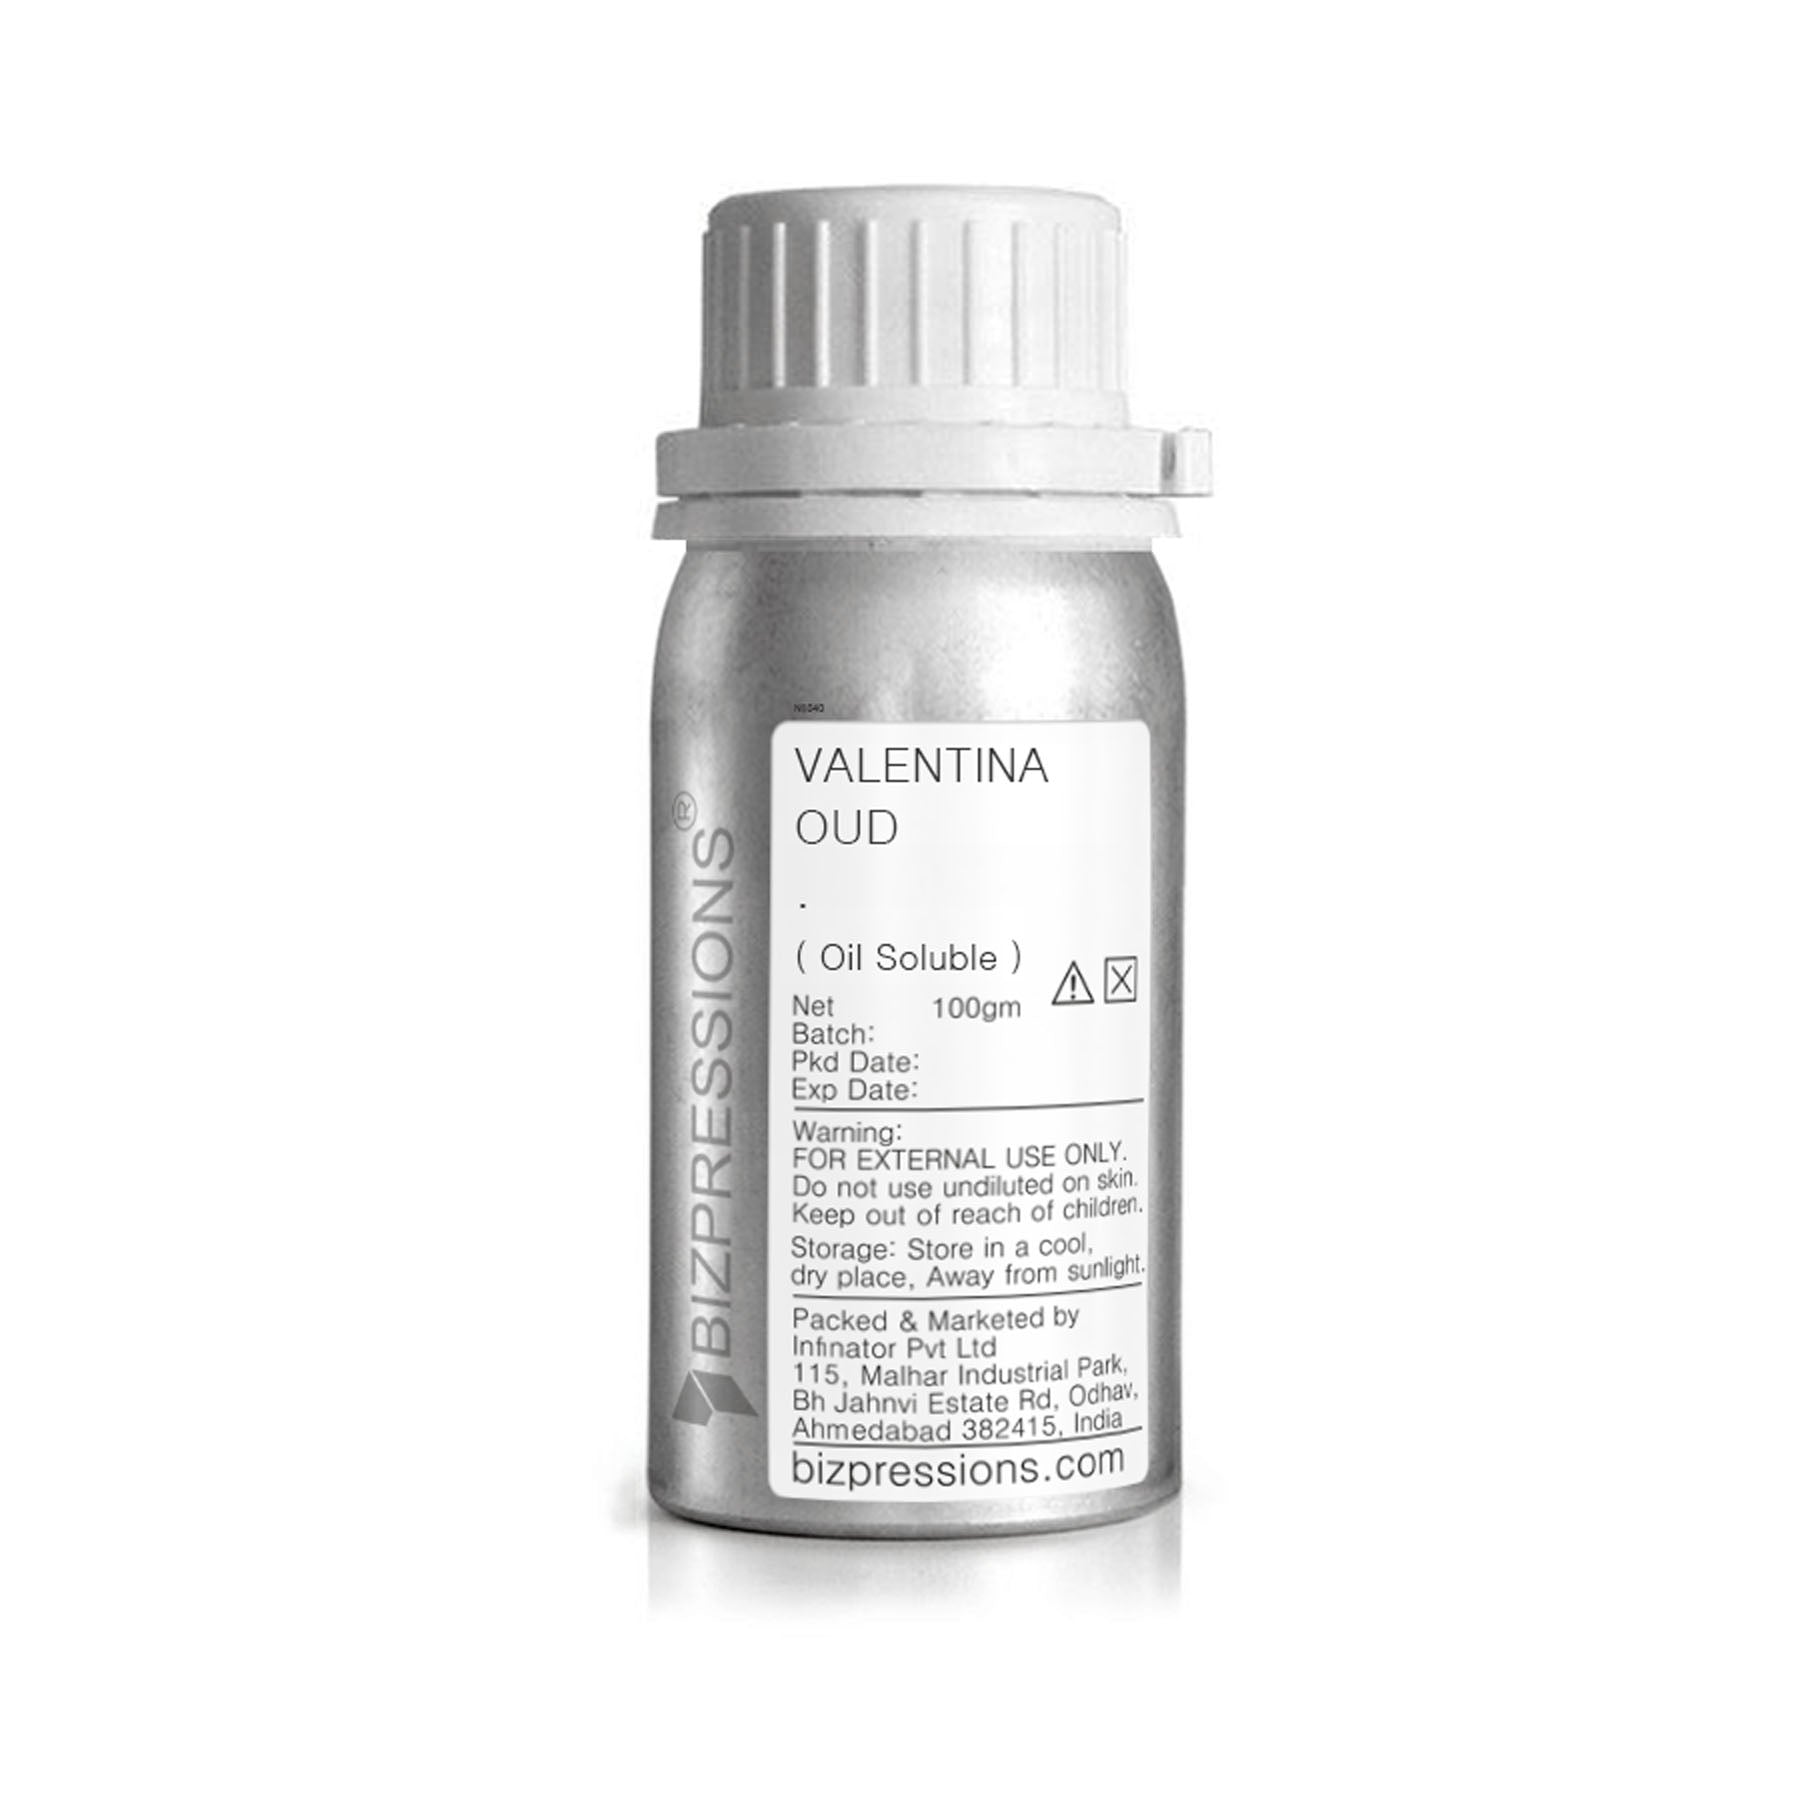 VALENTINA OUD - Fragrance ( Oil Soluble ) - 100 gm